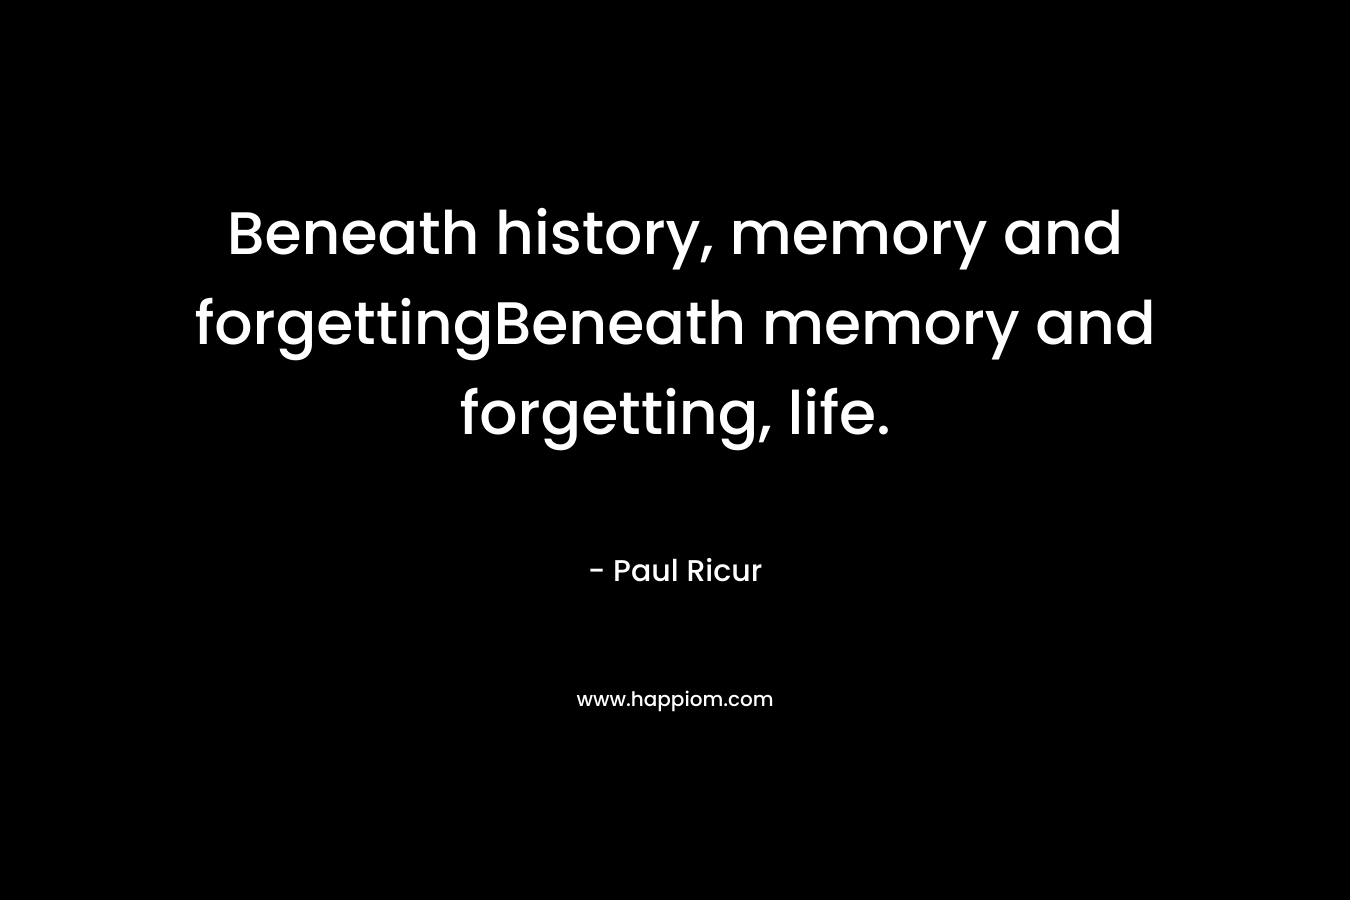 Beneath history, memory and forgettingBeneath memory and forgetting, life.